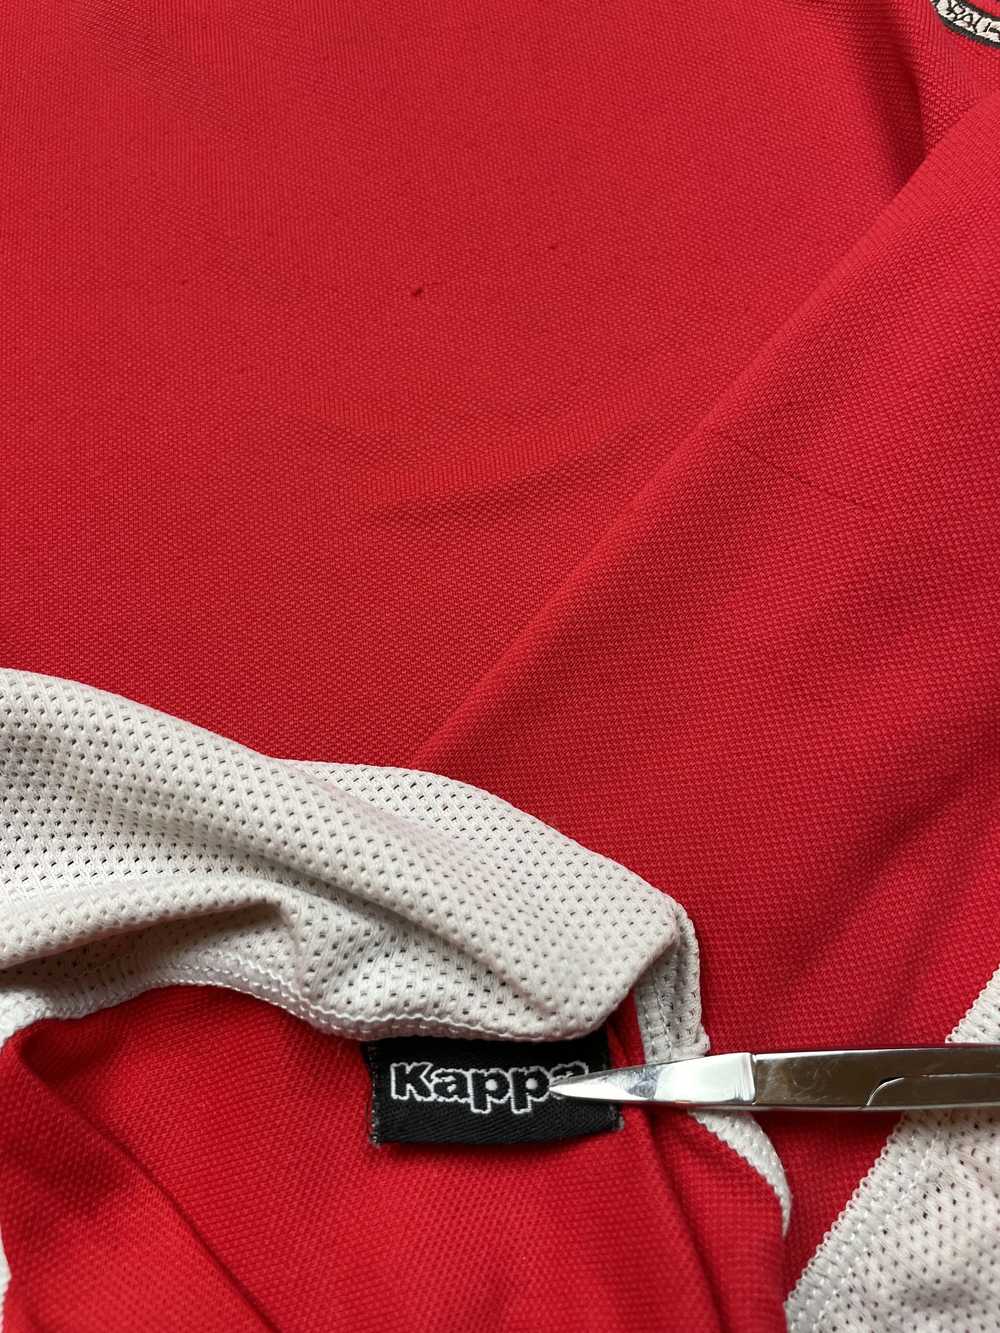 Kappa × Sportswear × Vintage Wales Home football … - image 11